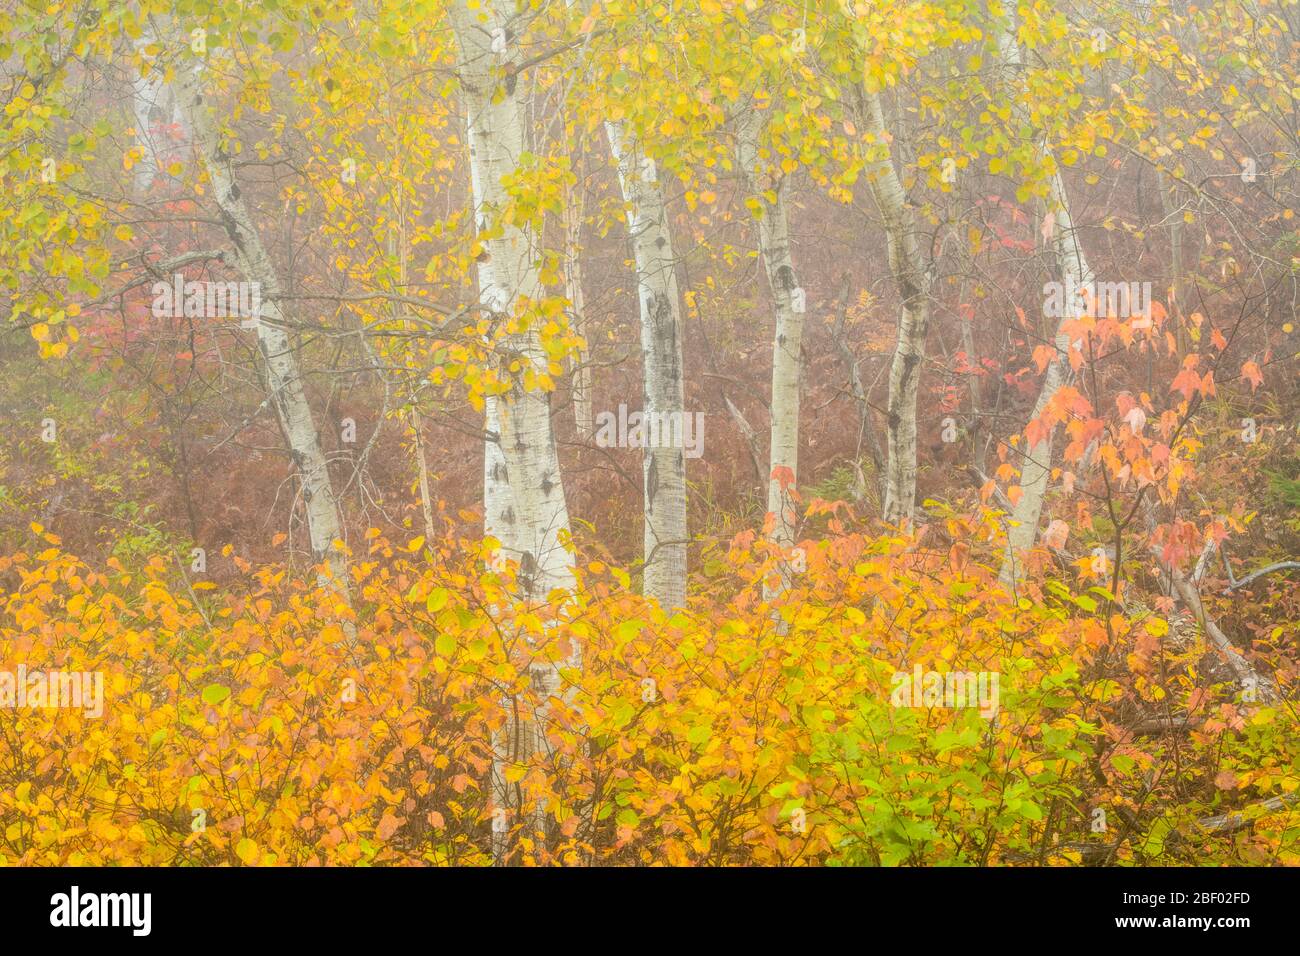 Aspen tree trunks in autumn with understory shrubs, Greater Sudbury, Ontario, Canada Stock Photo